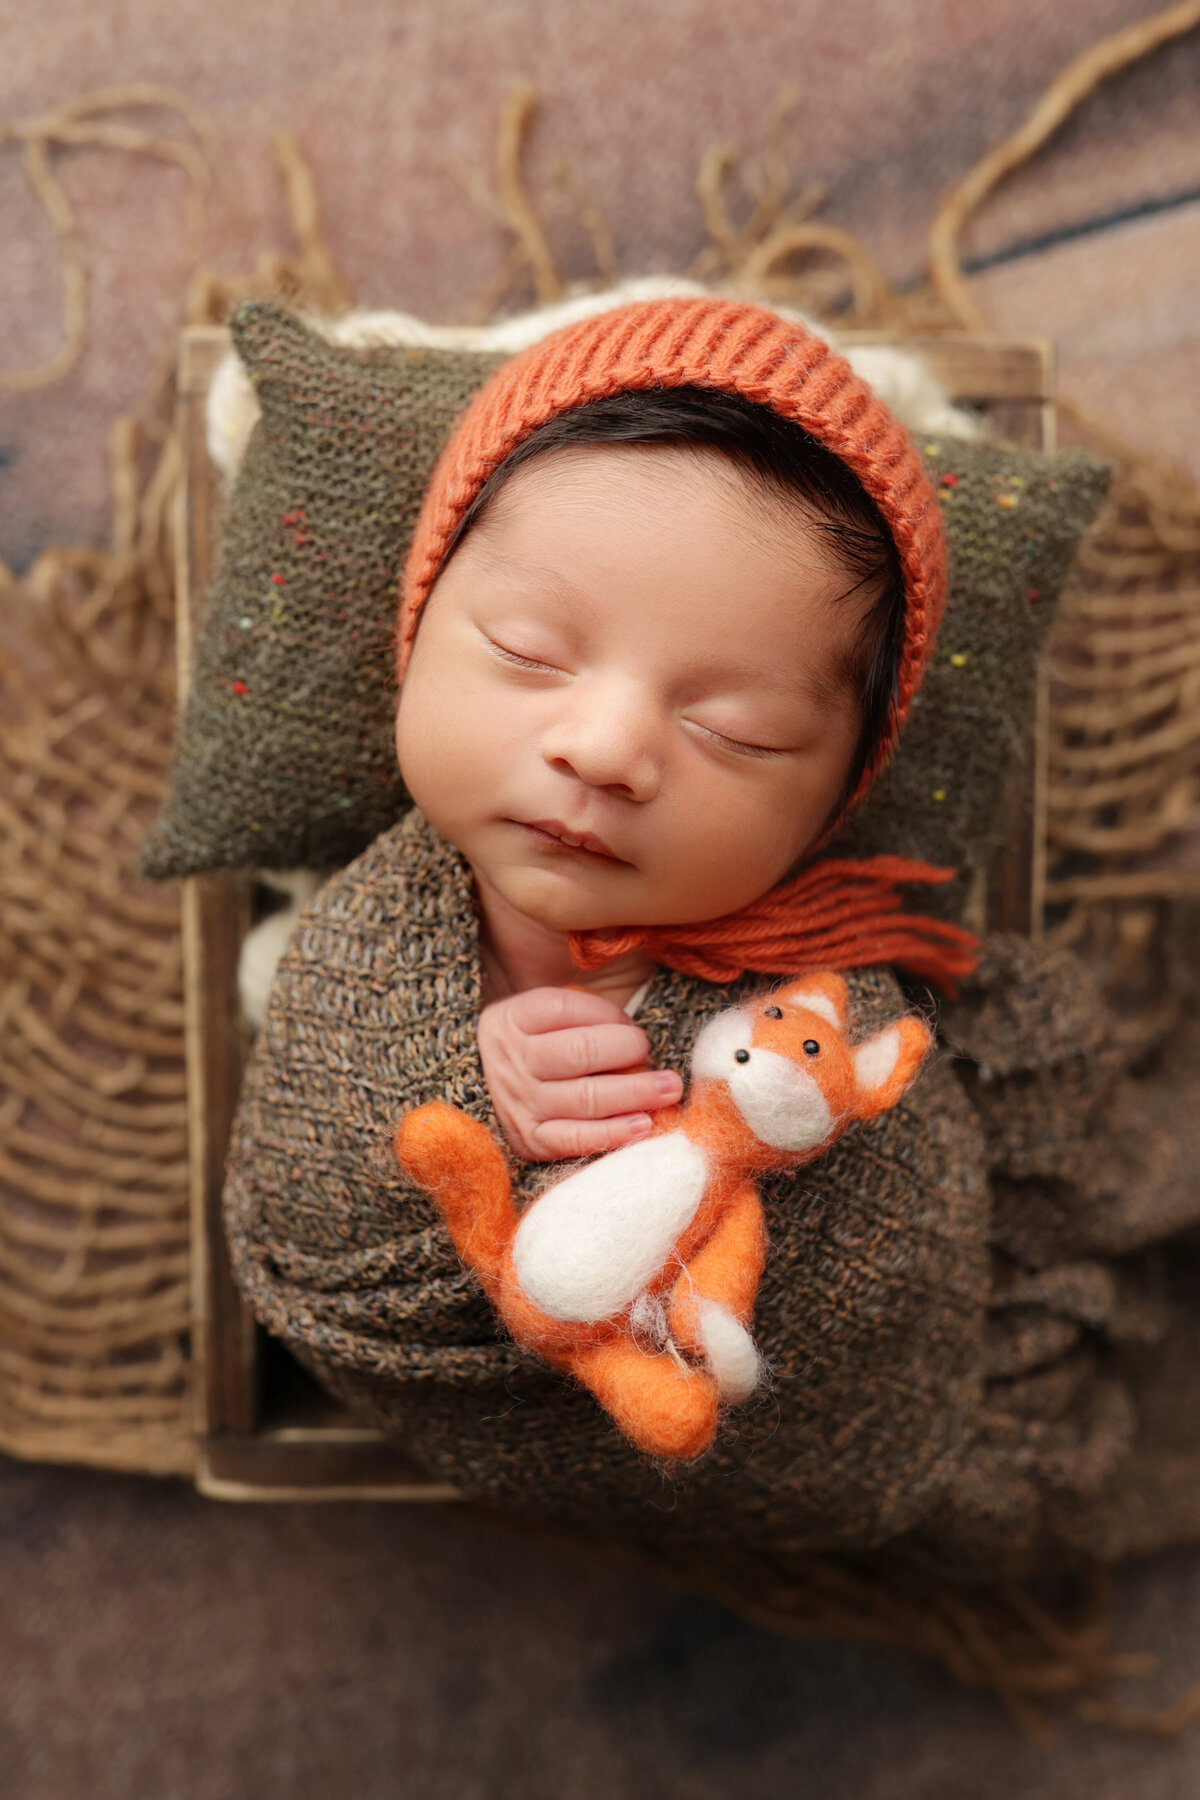 baby boy sleeping and holding a plush fox